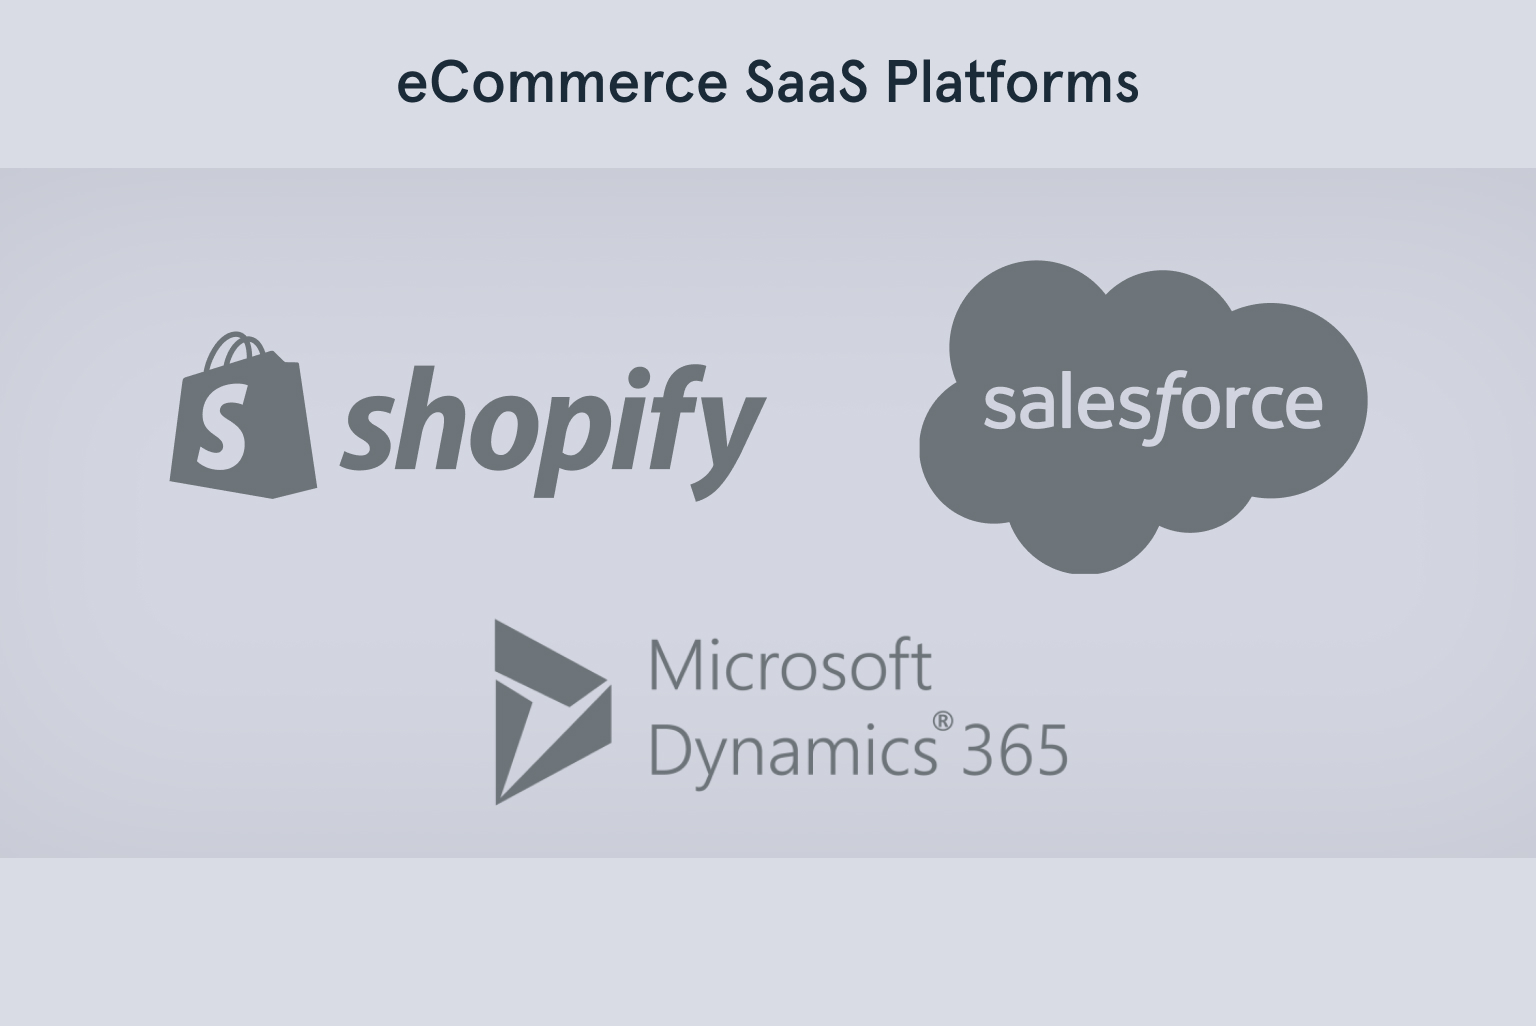 eCommerce SaaS Platforms